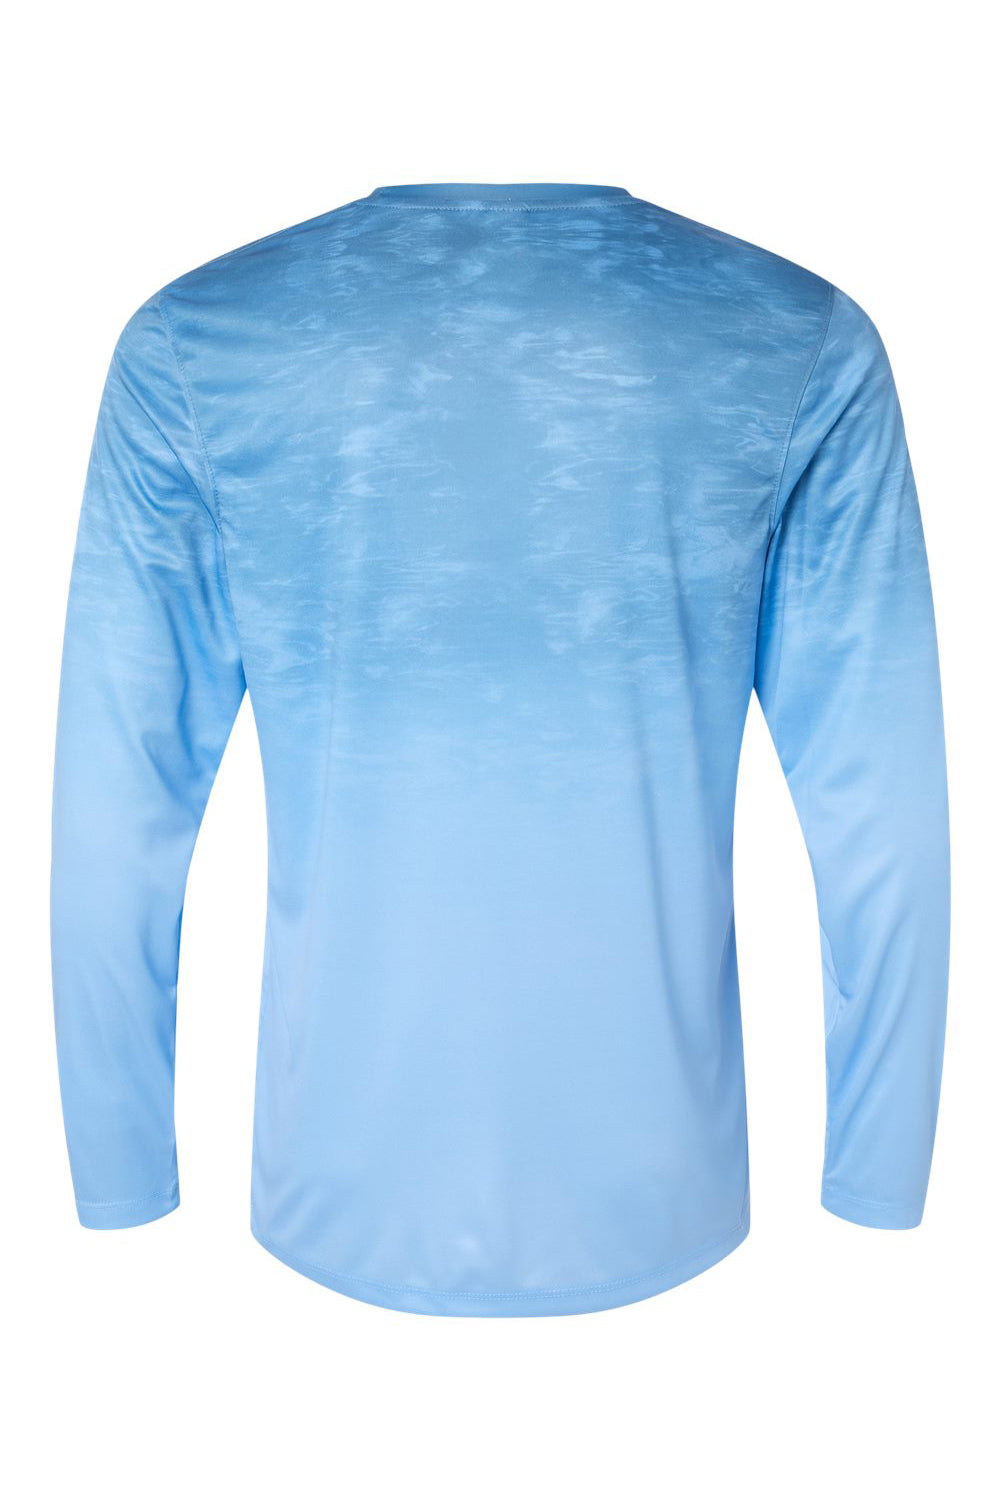 Paragon 229 Mens Montauk Oceanic Fade Performance Long Sleeve Crewneck T-Shirt Blue Mist Fade Flat Back